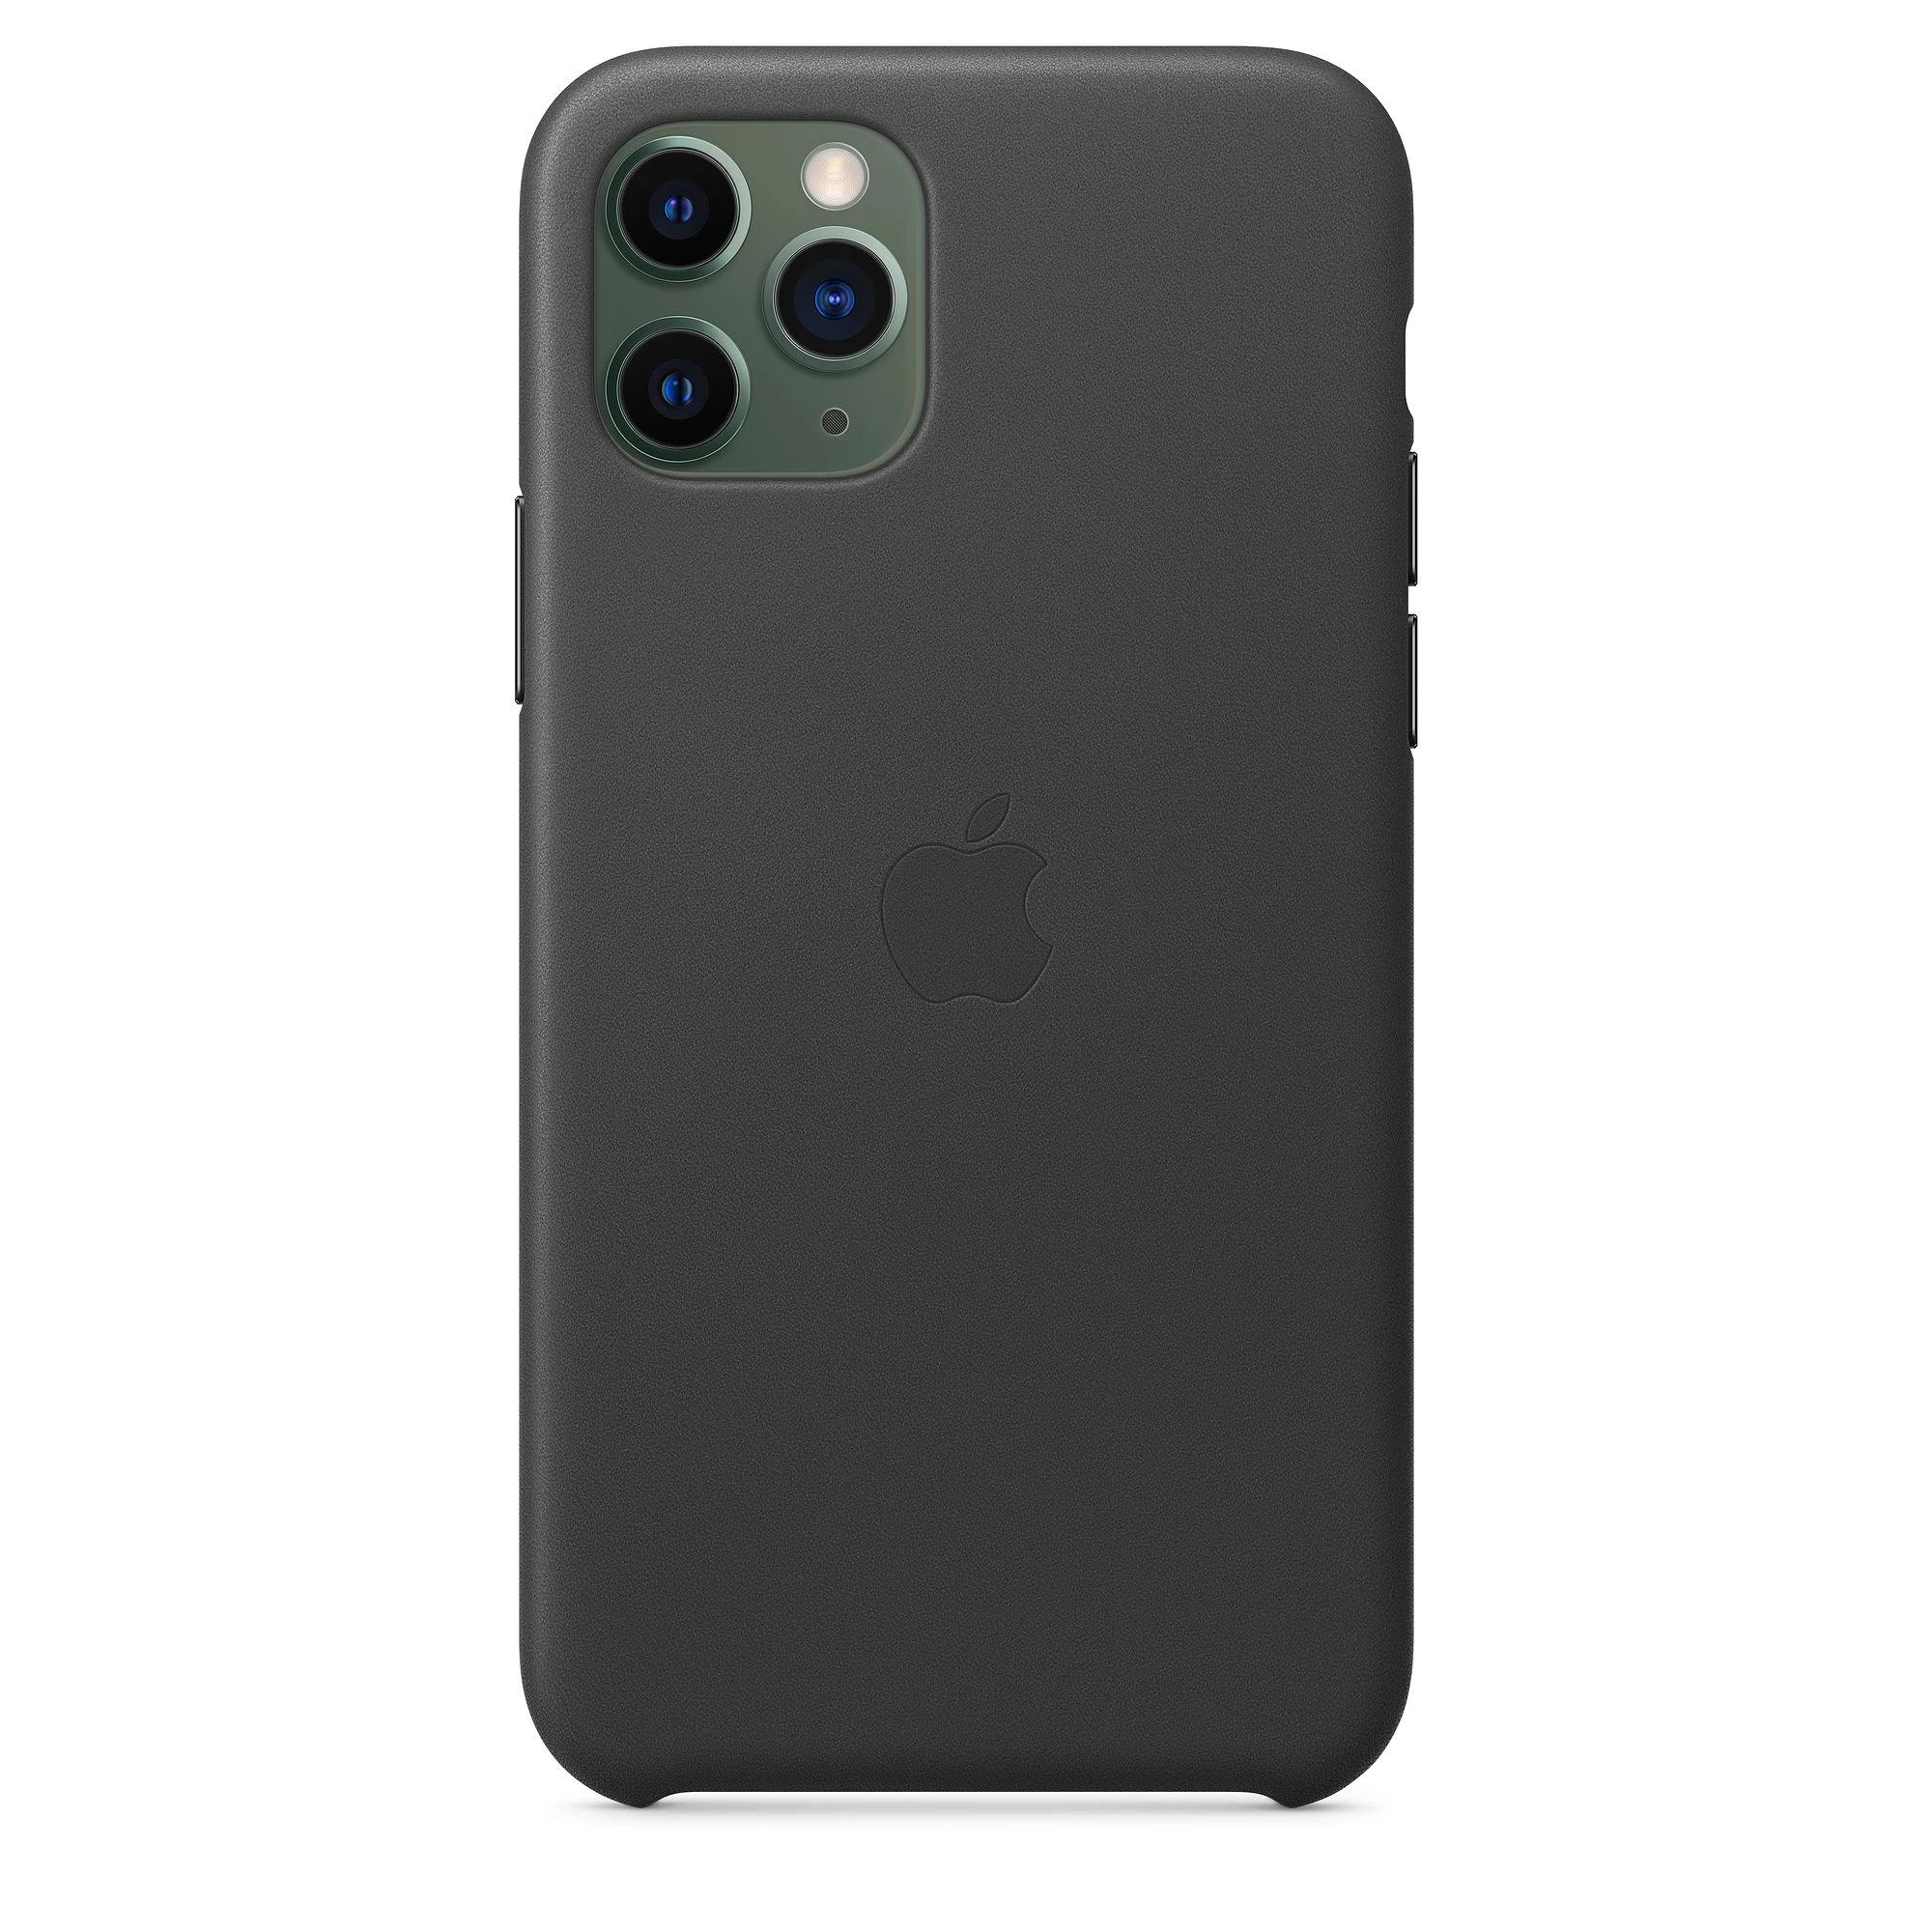 Чохол Apple iPhone 11 Pro Max Leather Case - Black (MX0E2)